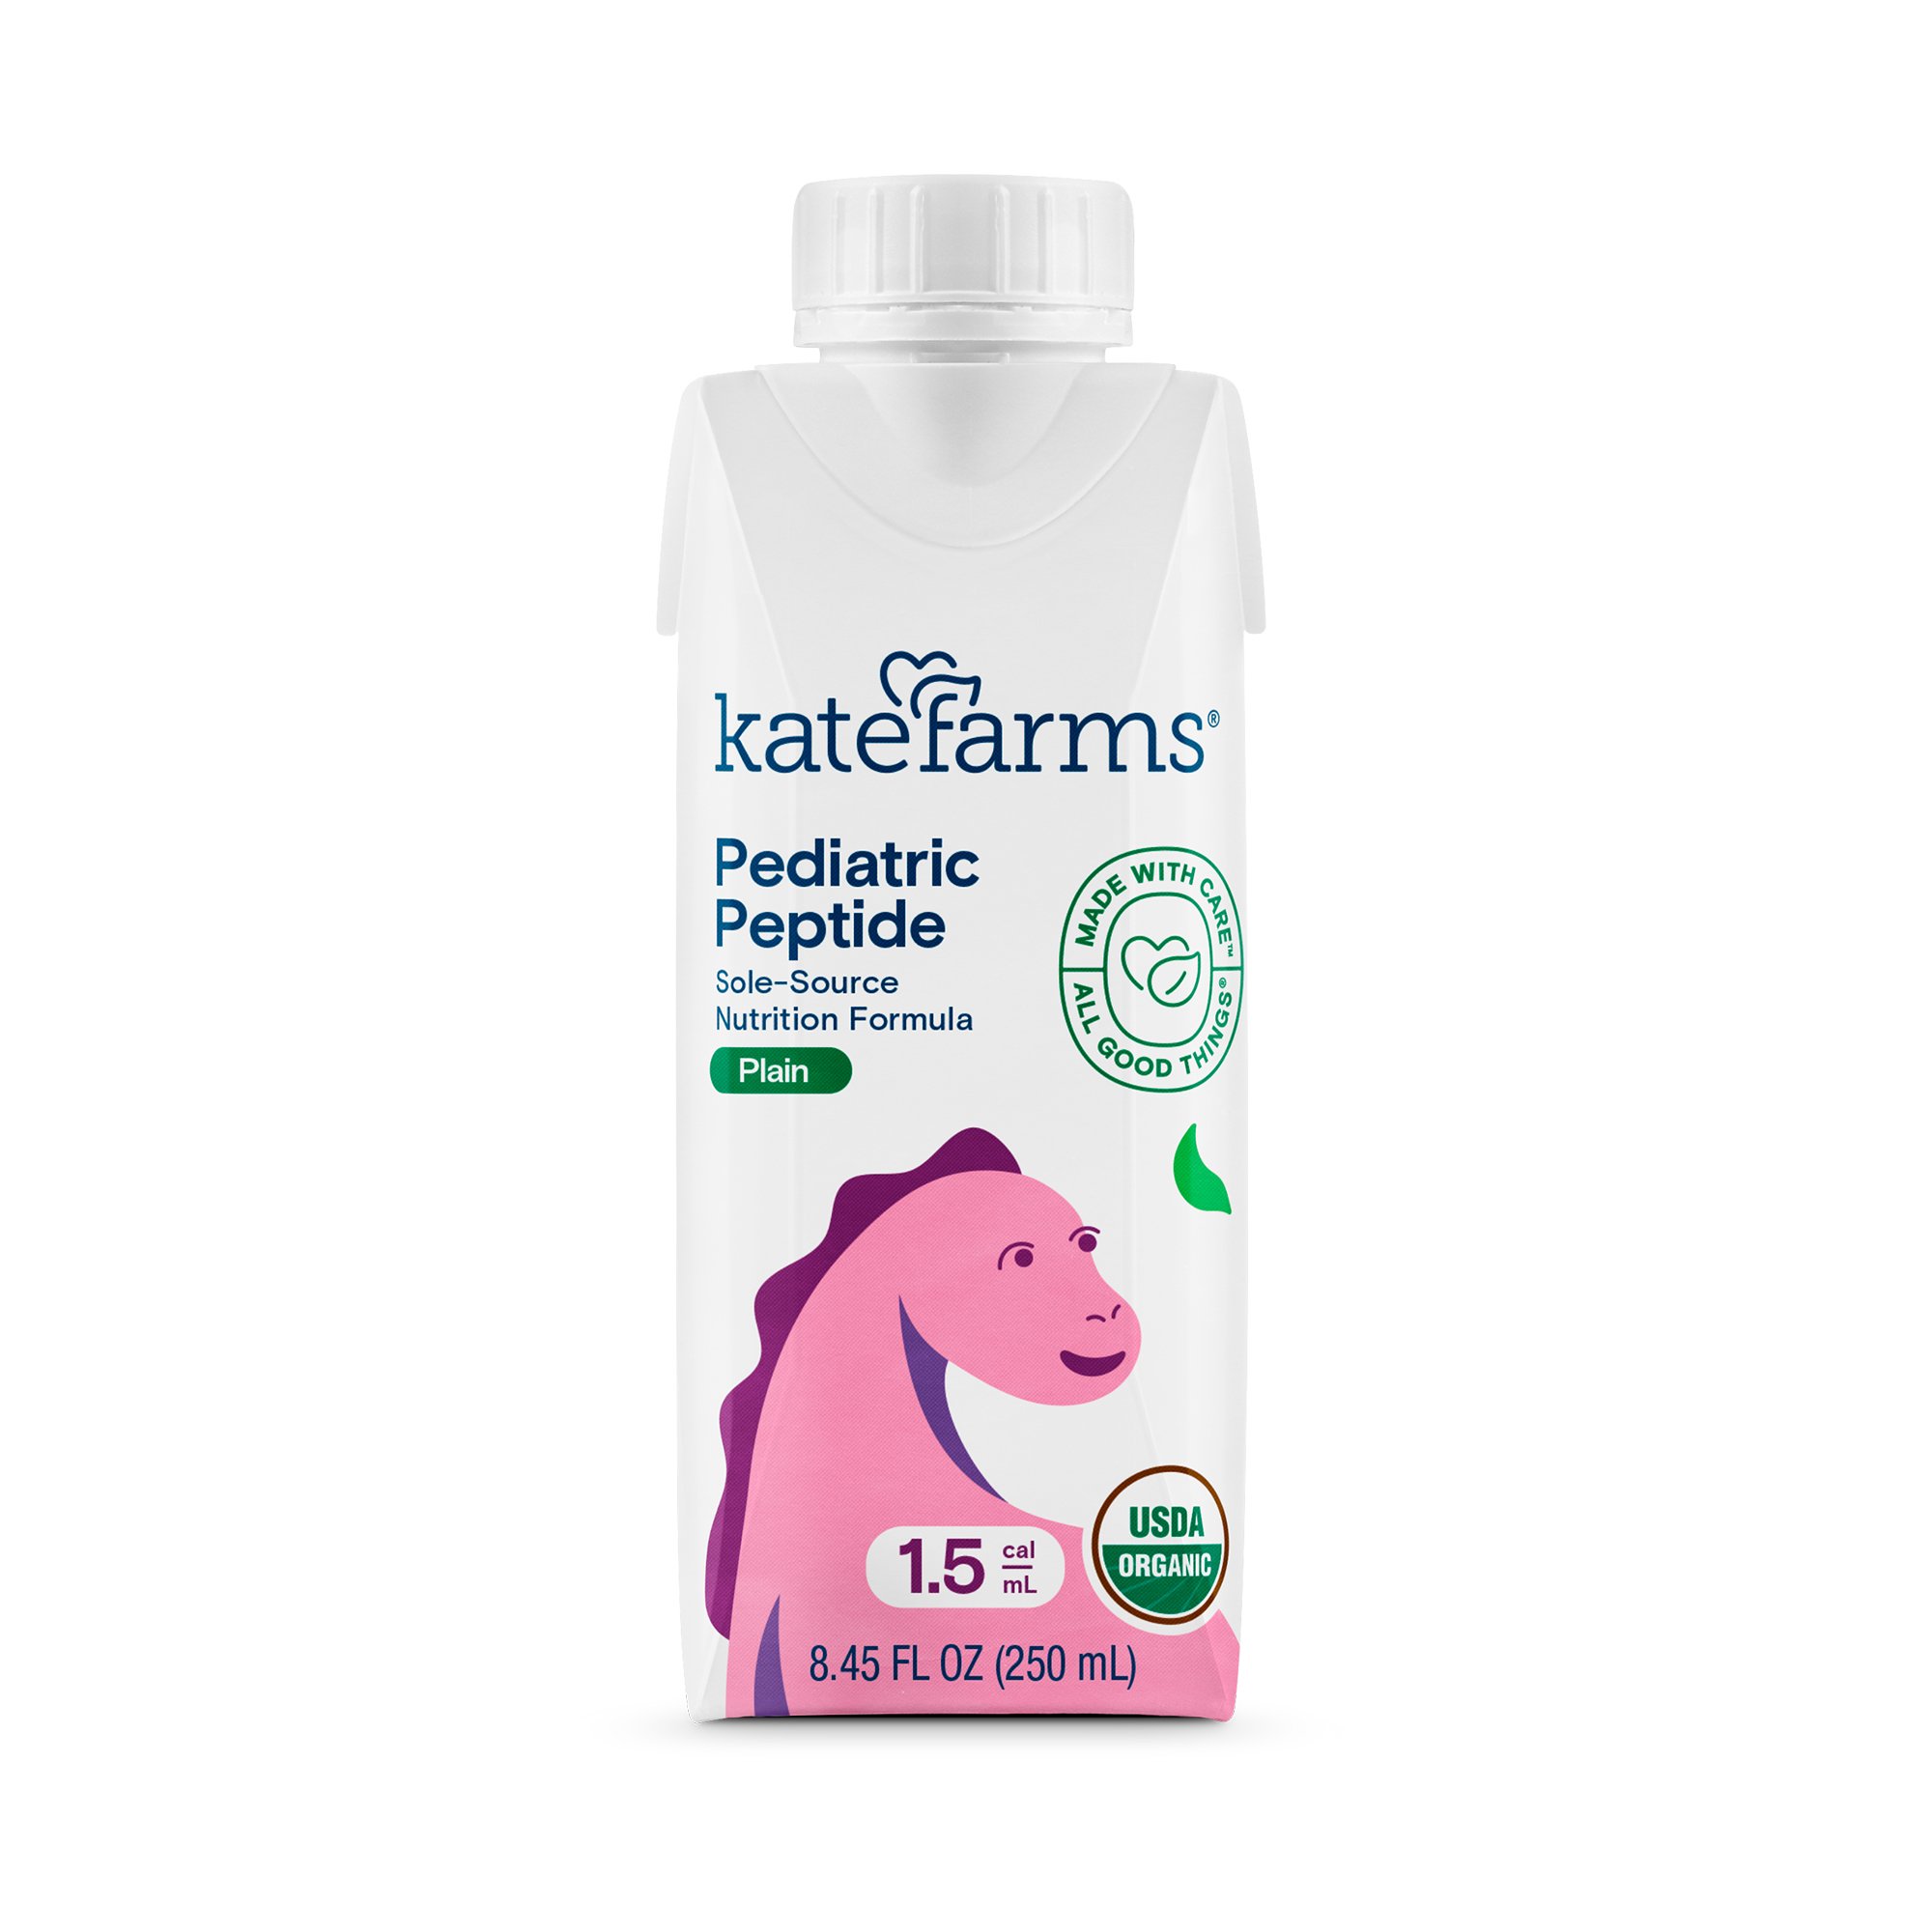 Kate Farms Pediatric Peptide 1.5 Sole-Source Nutrition Formula, Unflavored, 8.5-ounce carton MK 1184932